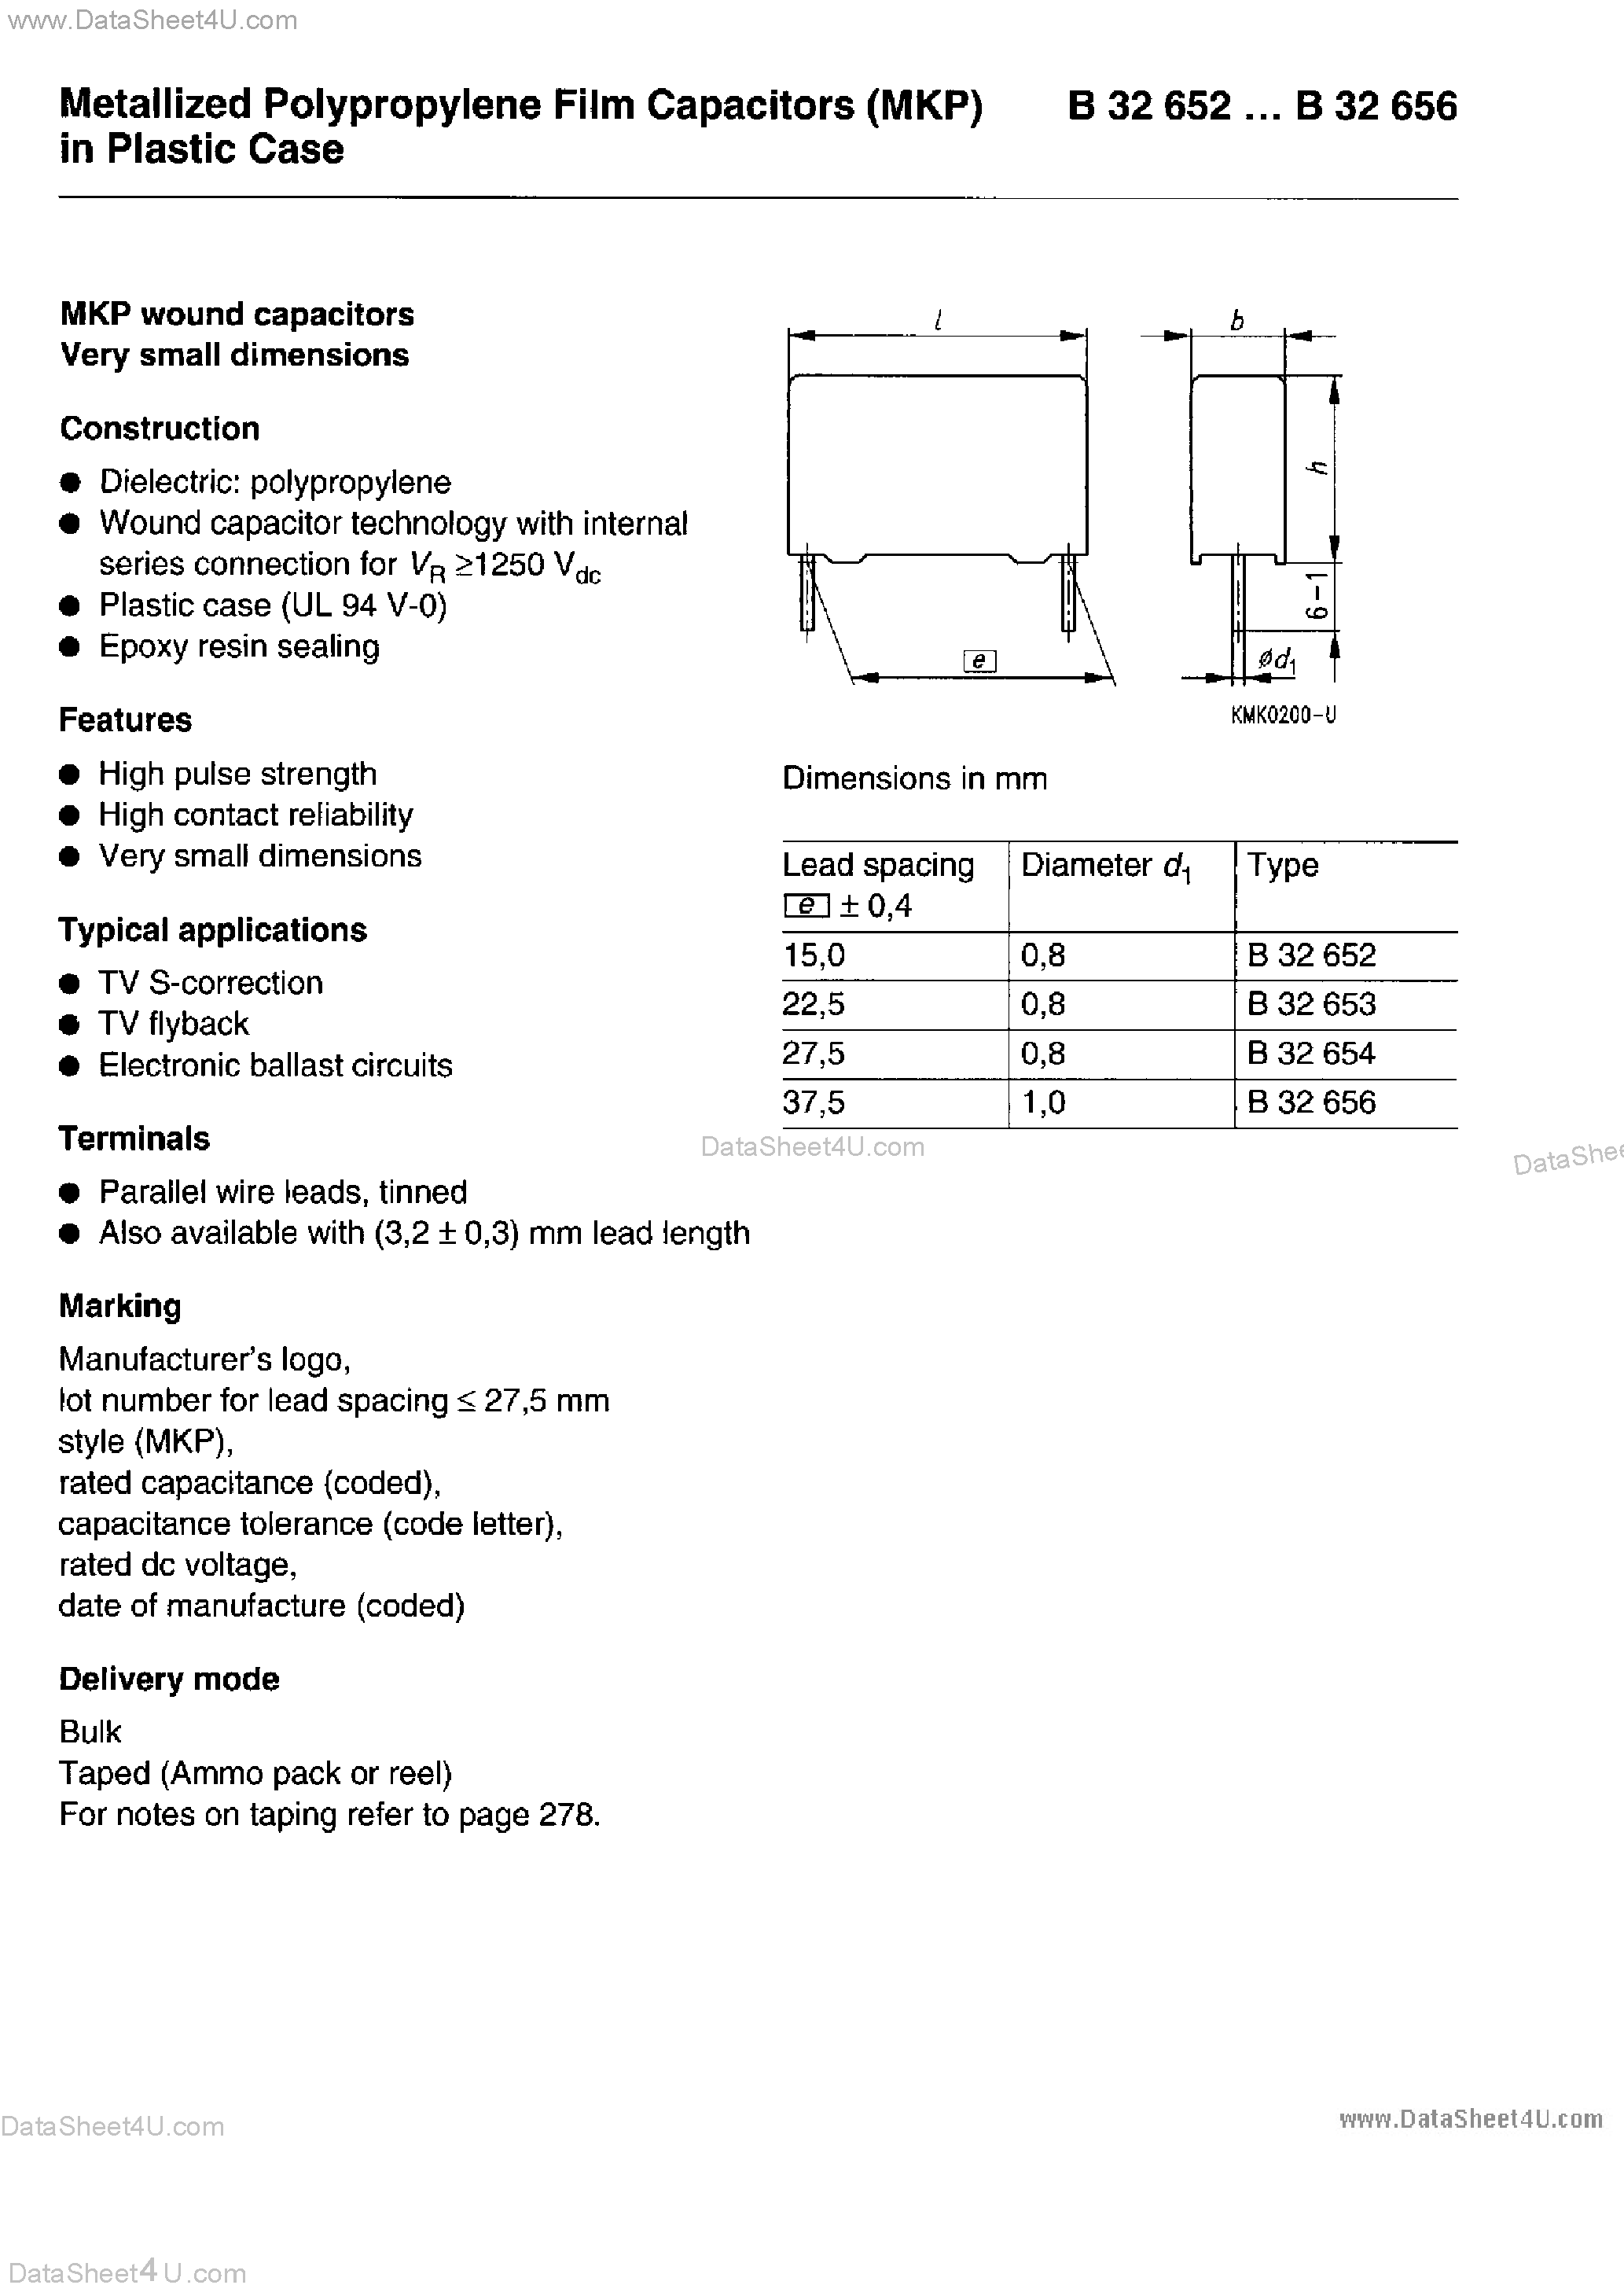 Datasheet B32652-xxxxx - (B32652 - B32656) Metallized Polypropylene Film Capacitors page 1